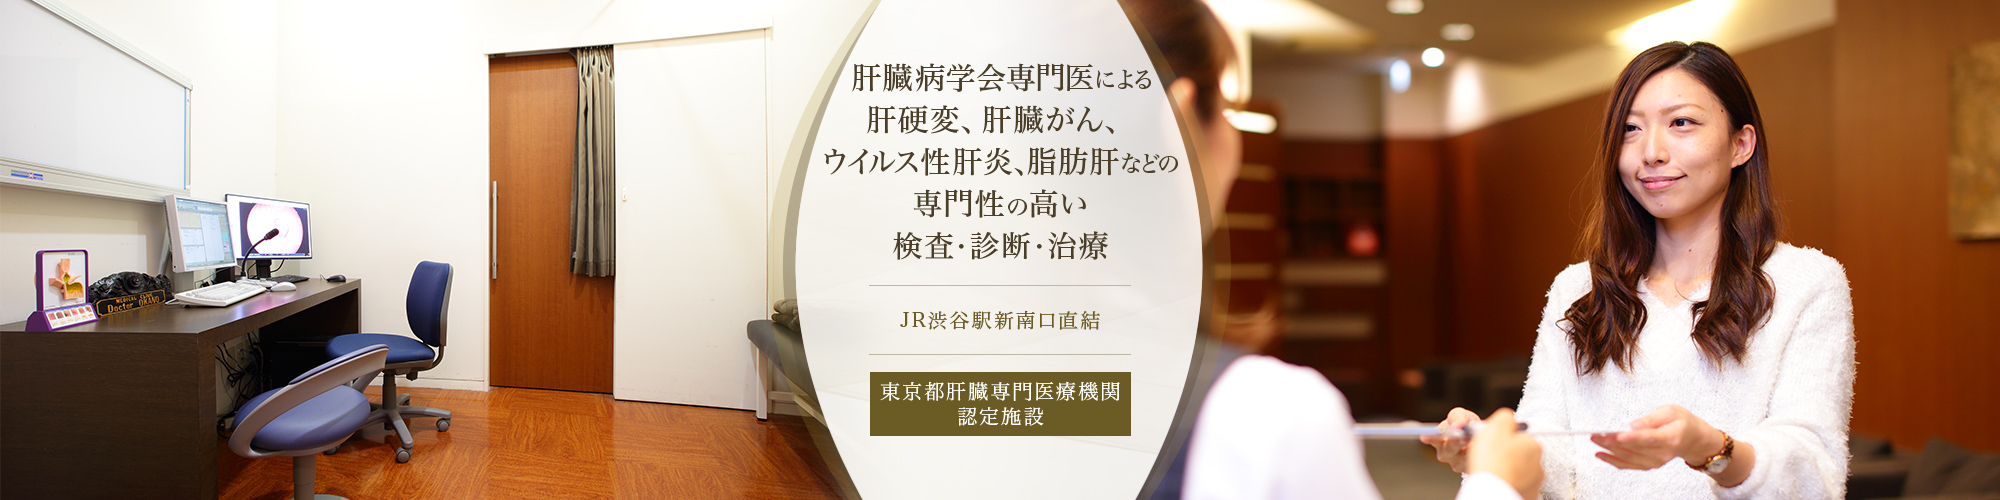 JR渋谷駅新南口直結 肝臓病学会専門医による肝硬変・肝臓がん・肝炎の専門性の高い検査・診断・治療